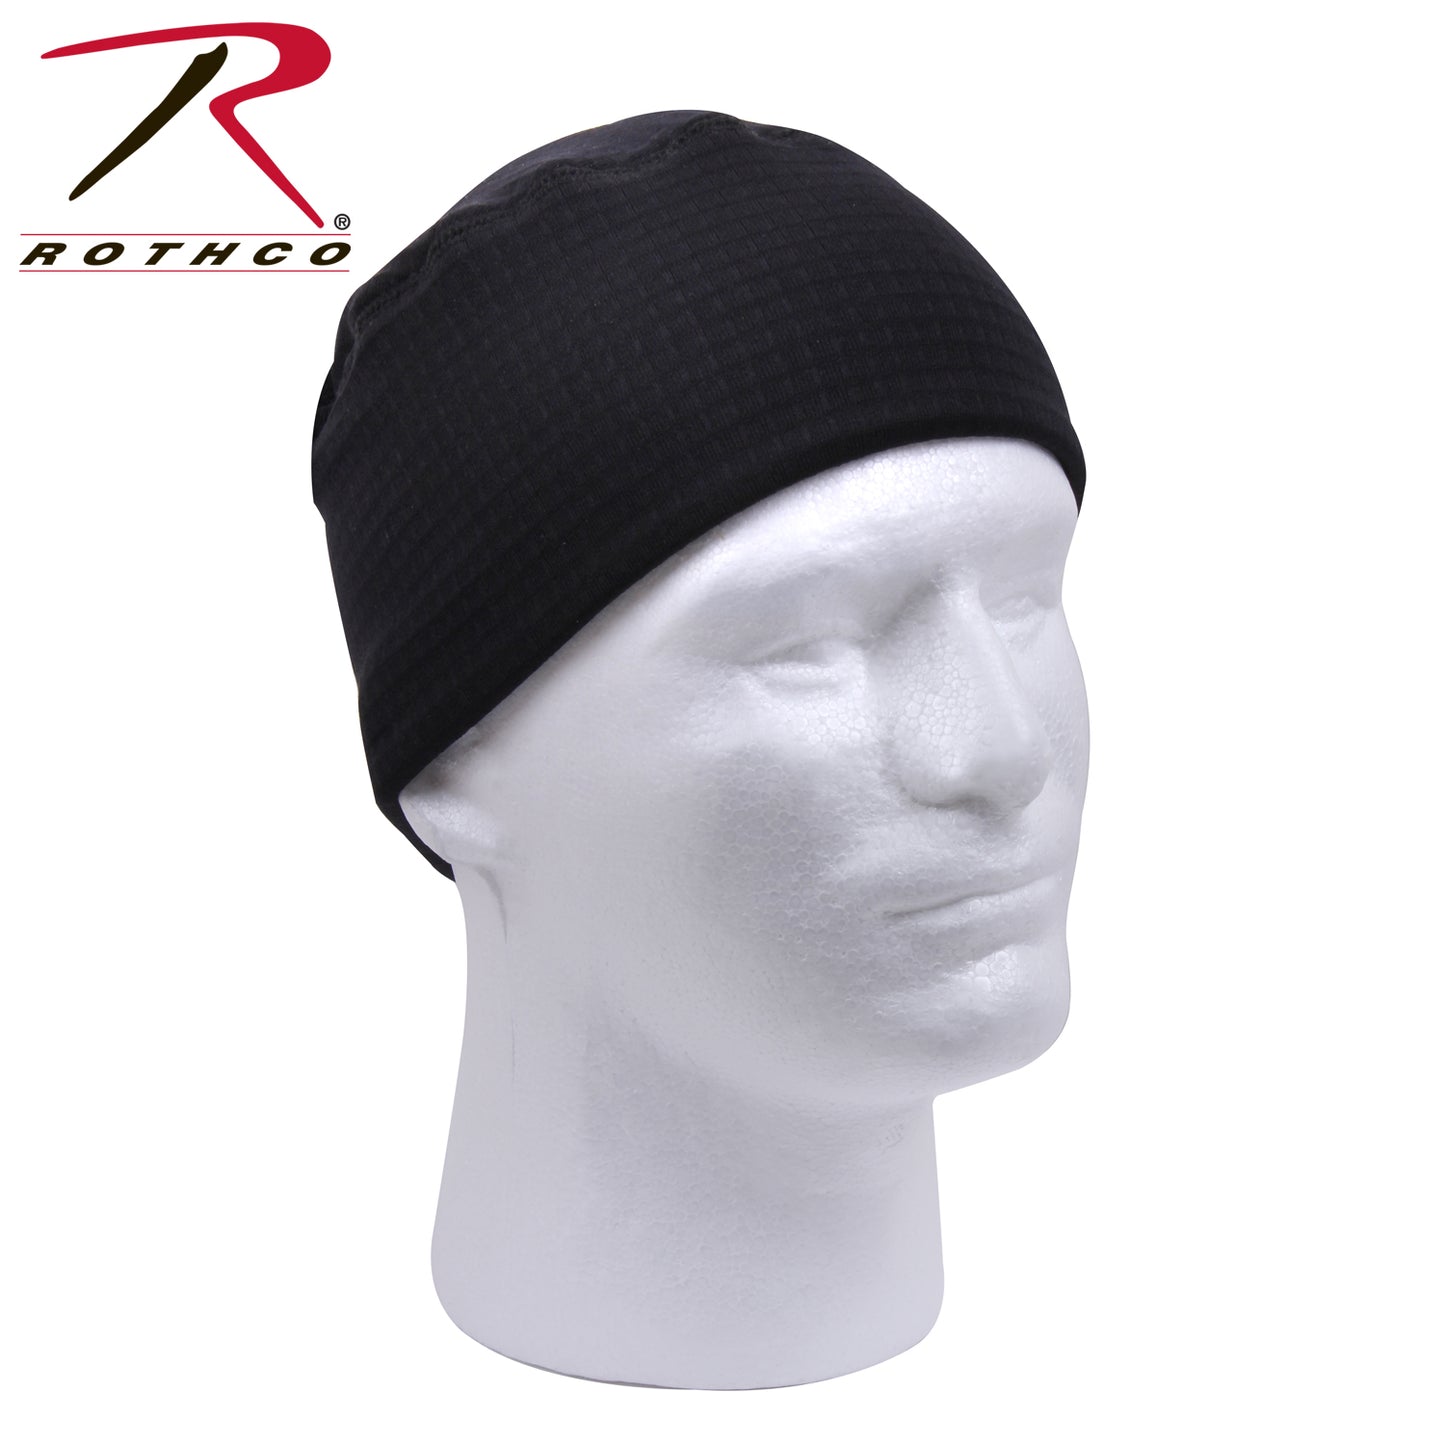 Black Grid Fleece Winter Watch Cap - Adult Formfitting Cold Weather Ski Hat